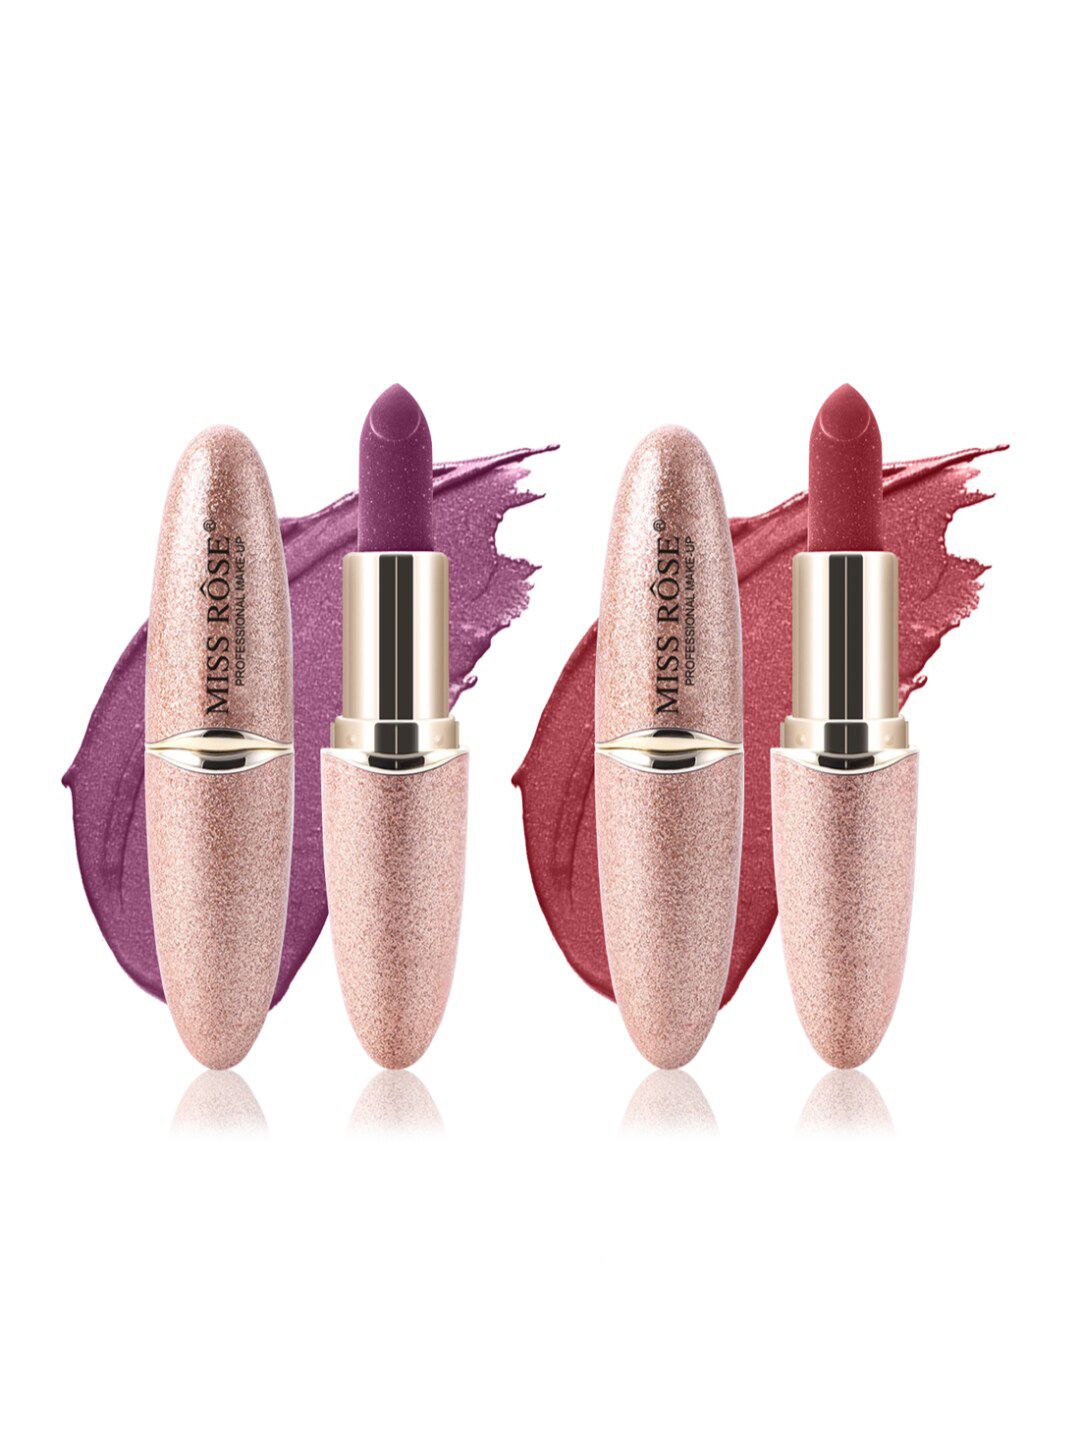 MISS ROSE Professional Make-Up Set of 2 Matte Smooth Velvet Lipstick - 02 & 05 Price in India